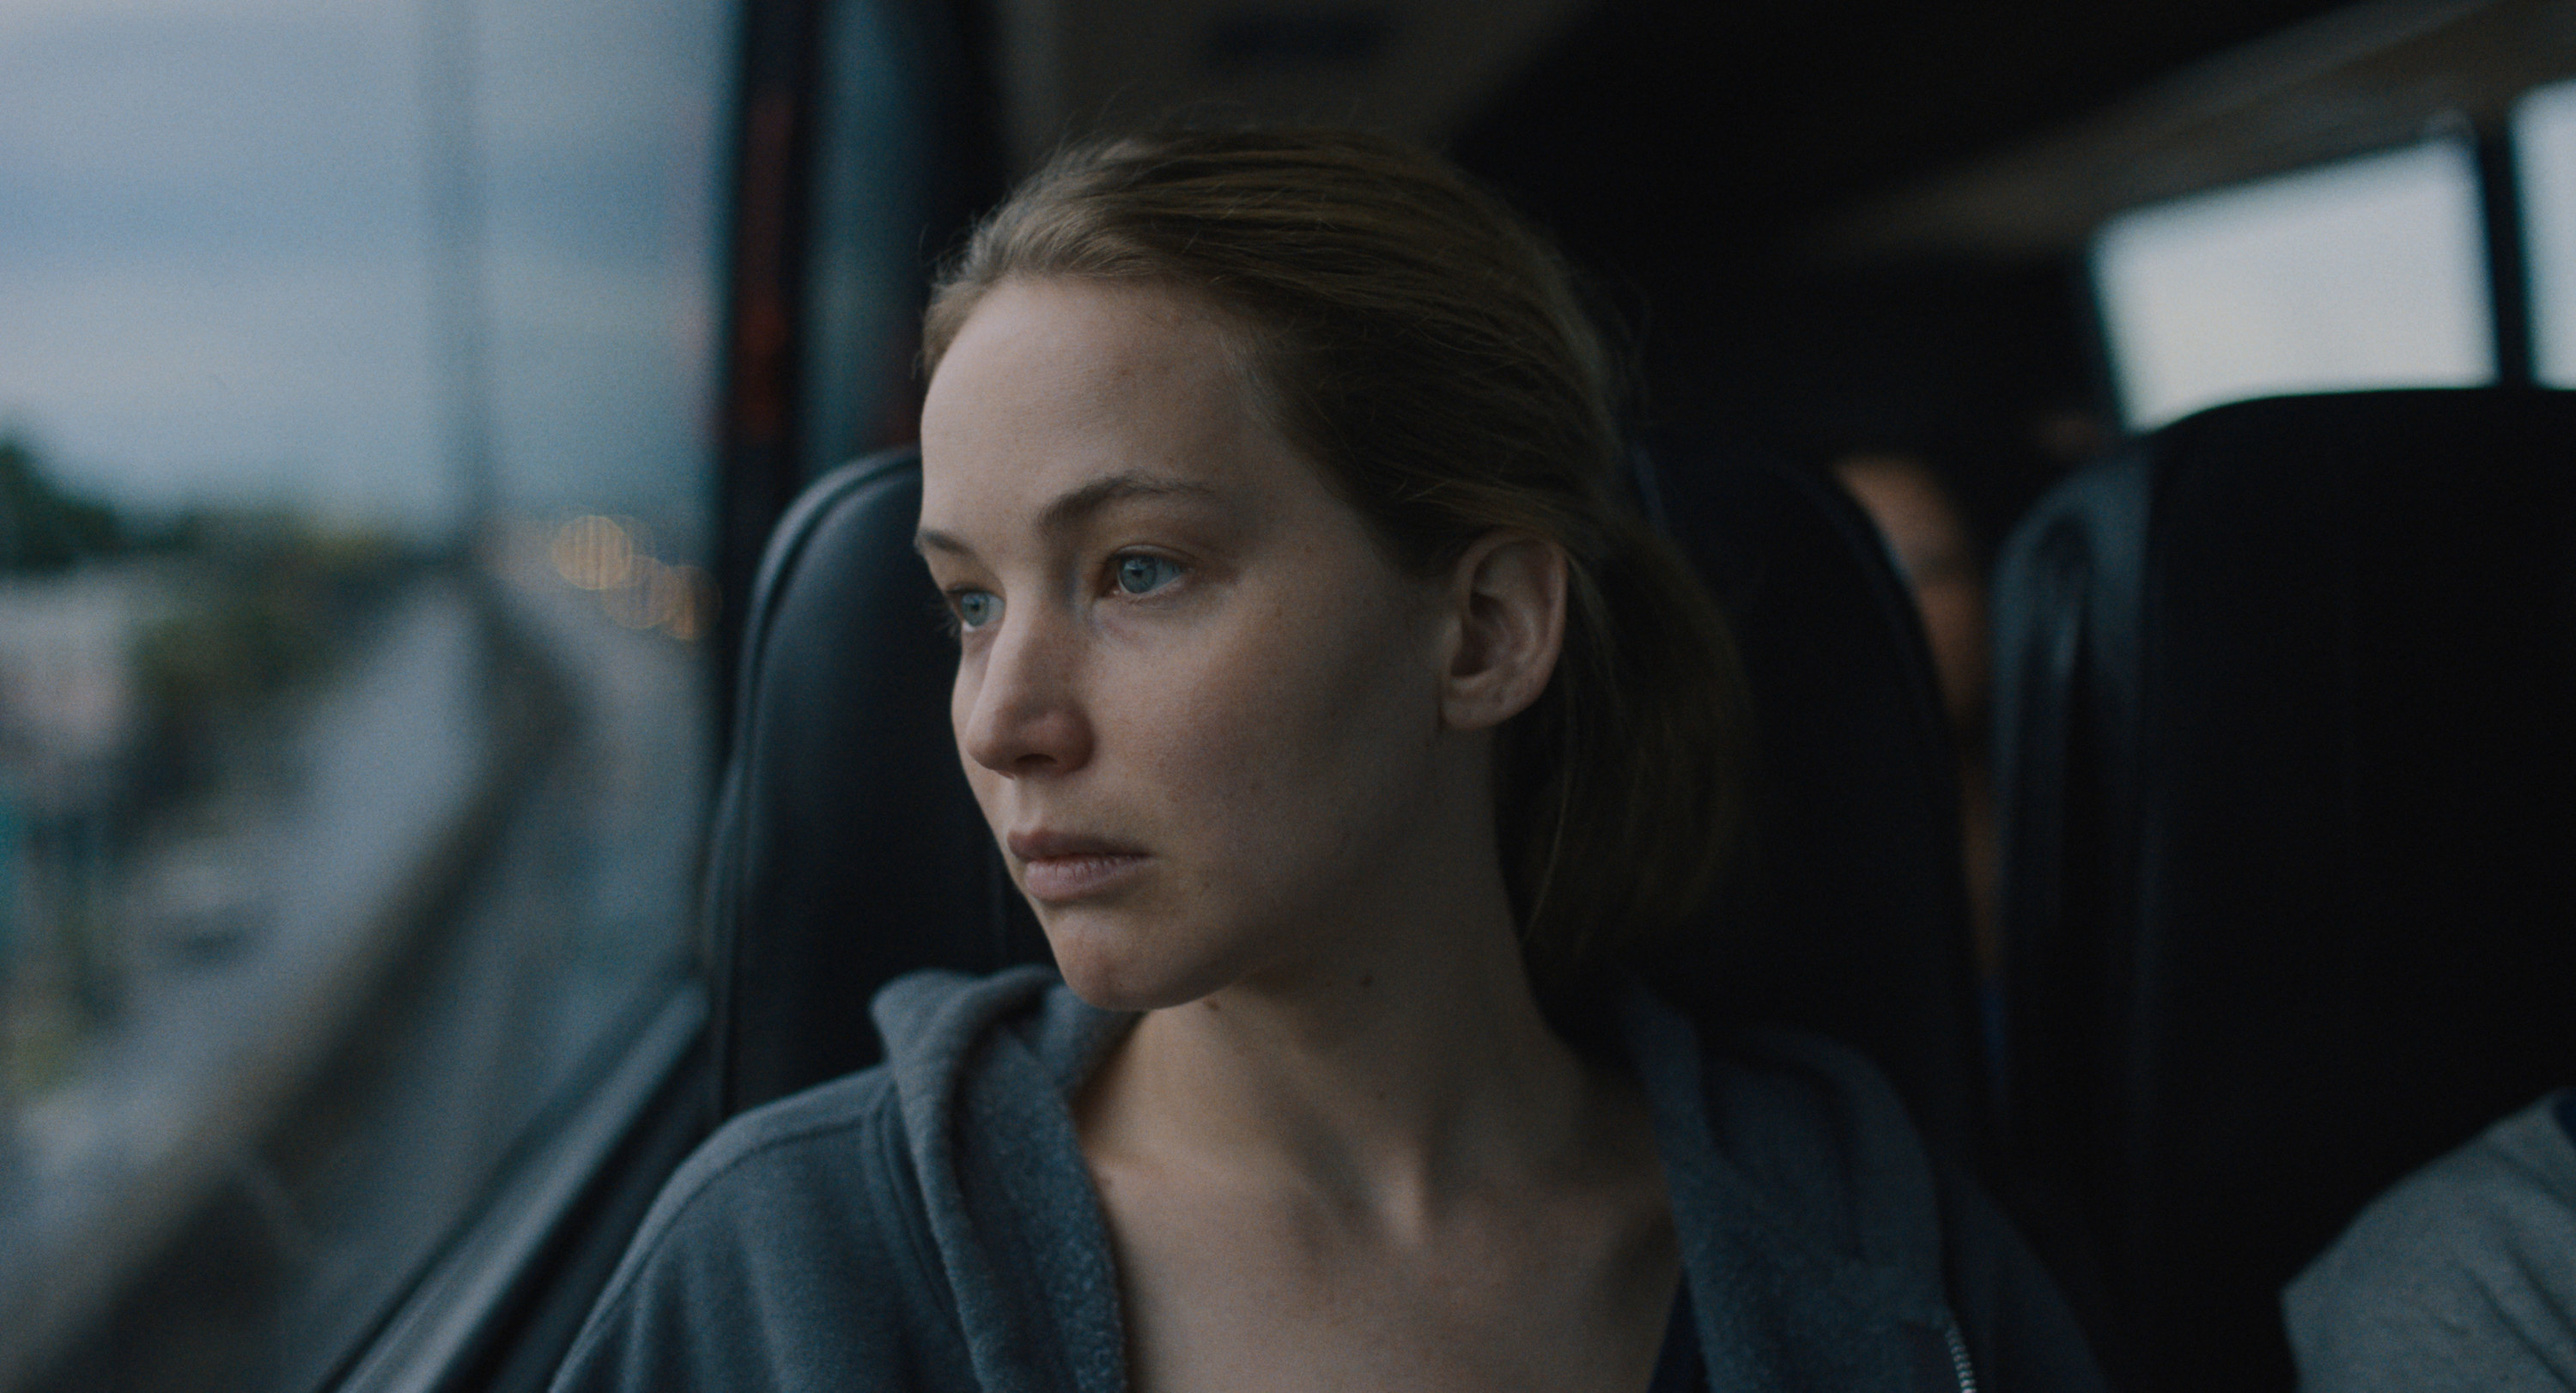 Jennifer Lawrence rides a bus